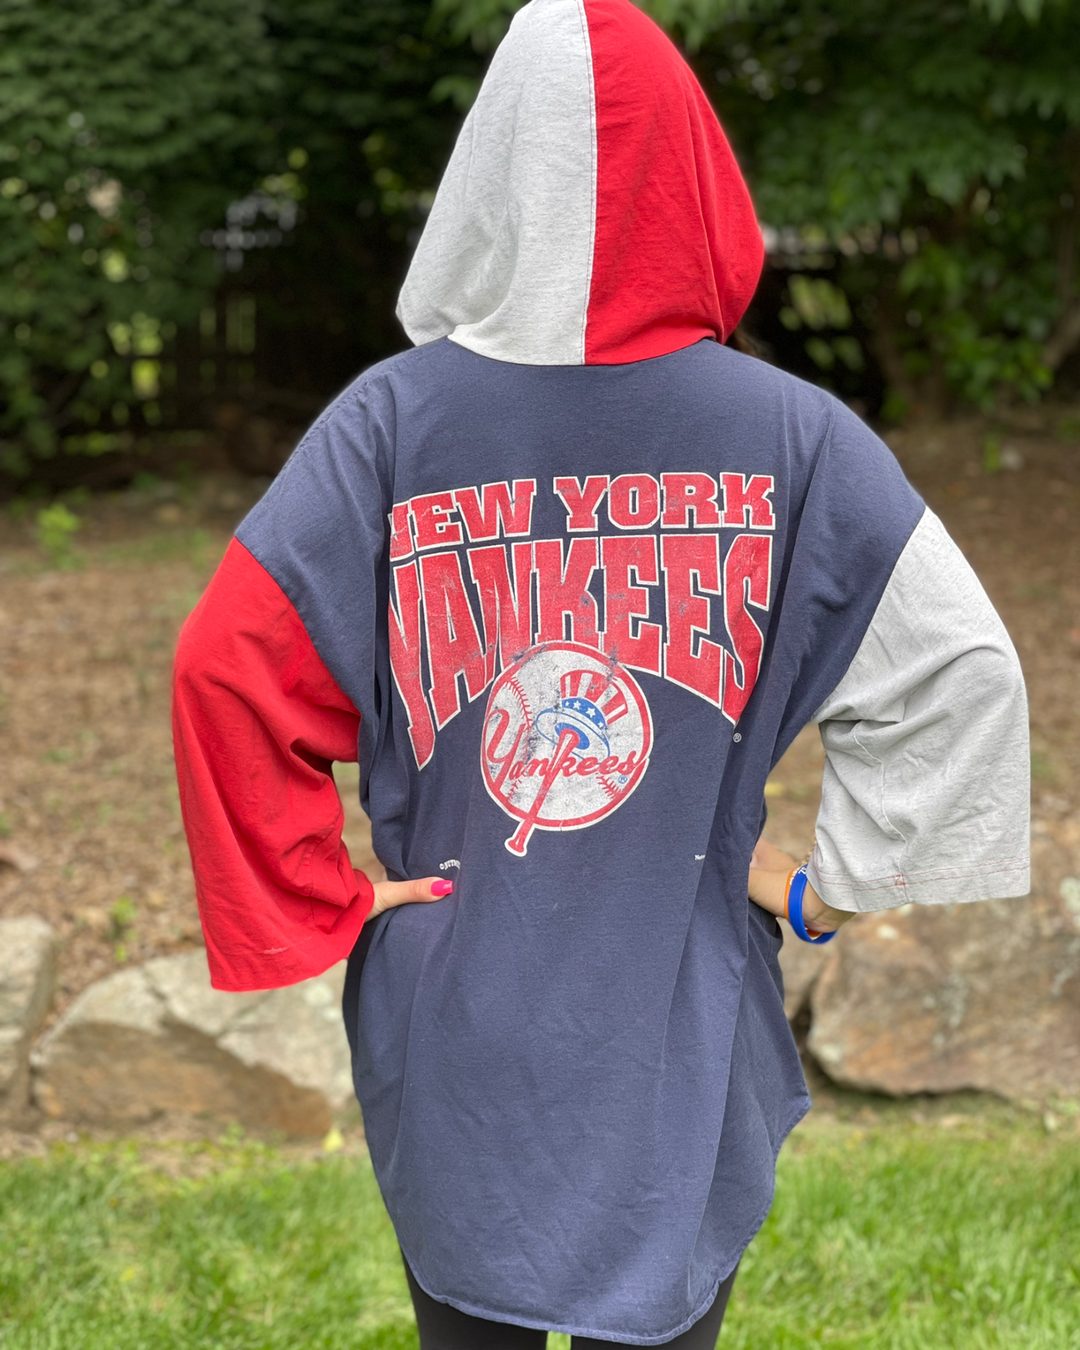 Vintage NY Yankees Sweatshirt